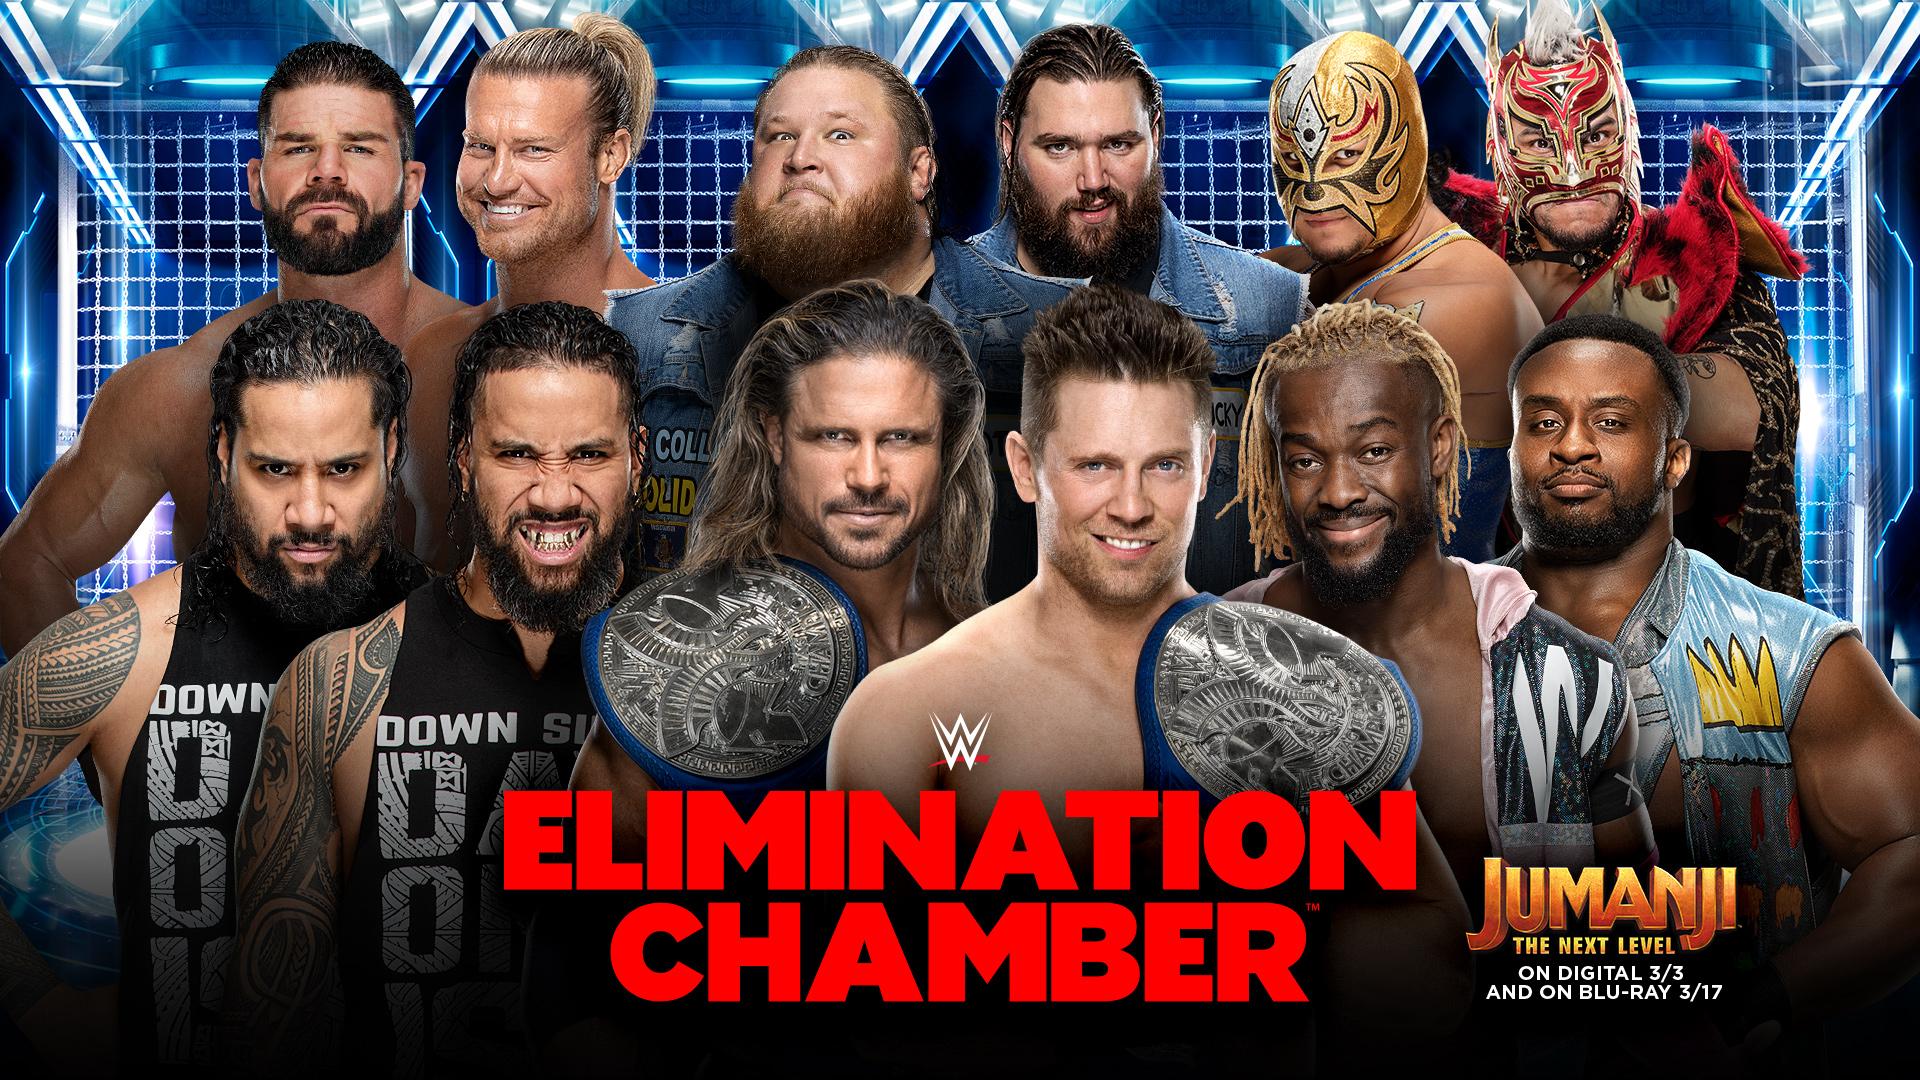 WWE 2020 Wallpaper Free WWE 2020 Background